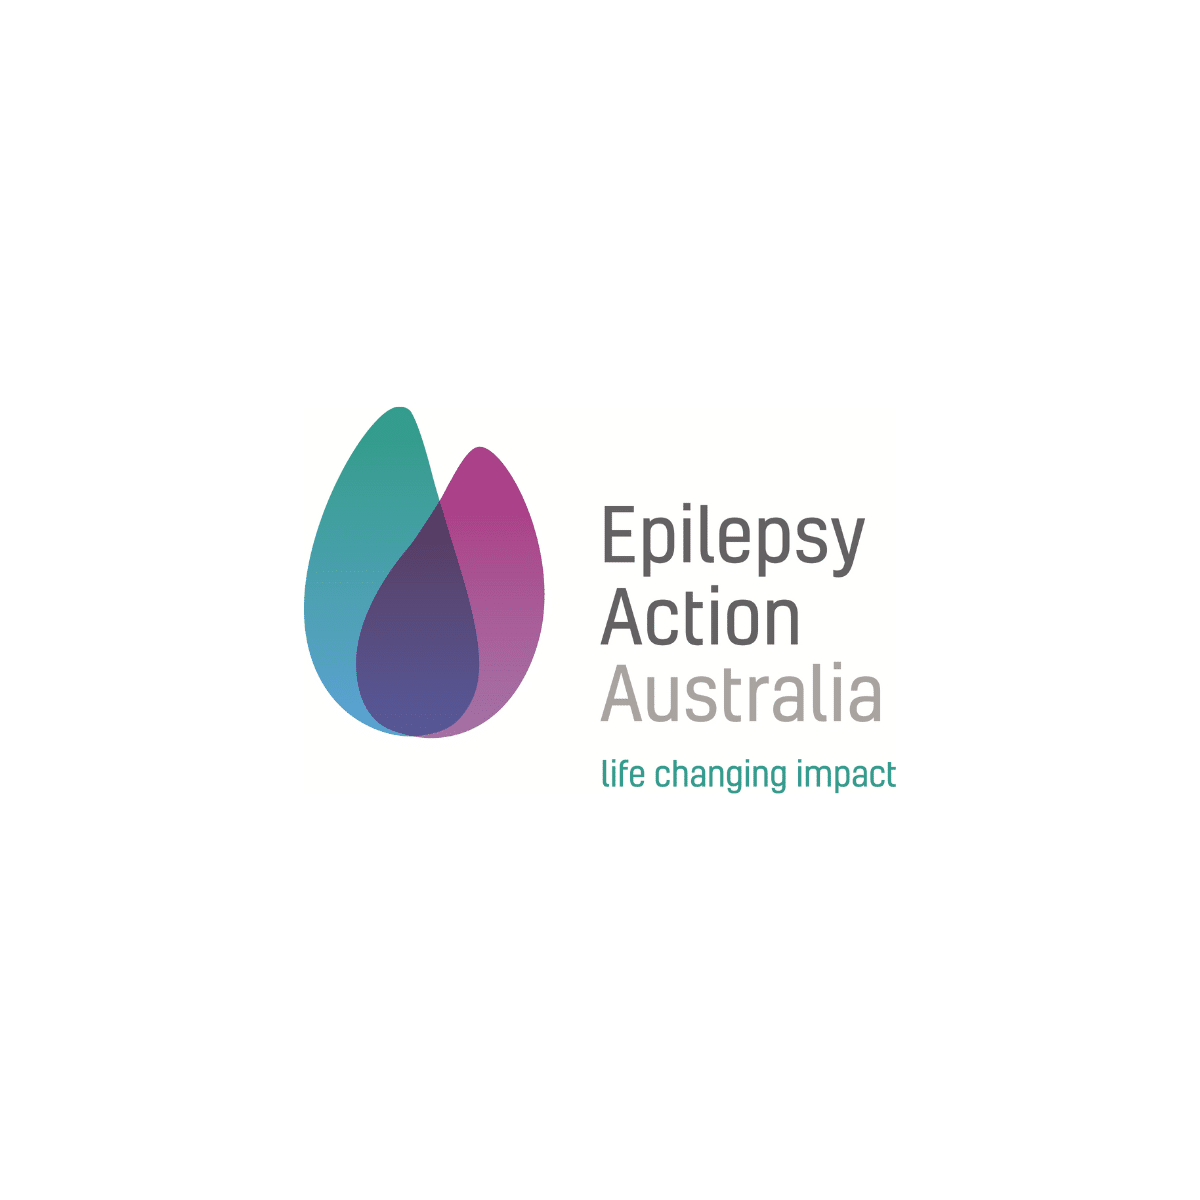 Epilepsy Action Australia logo